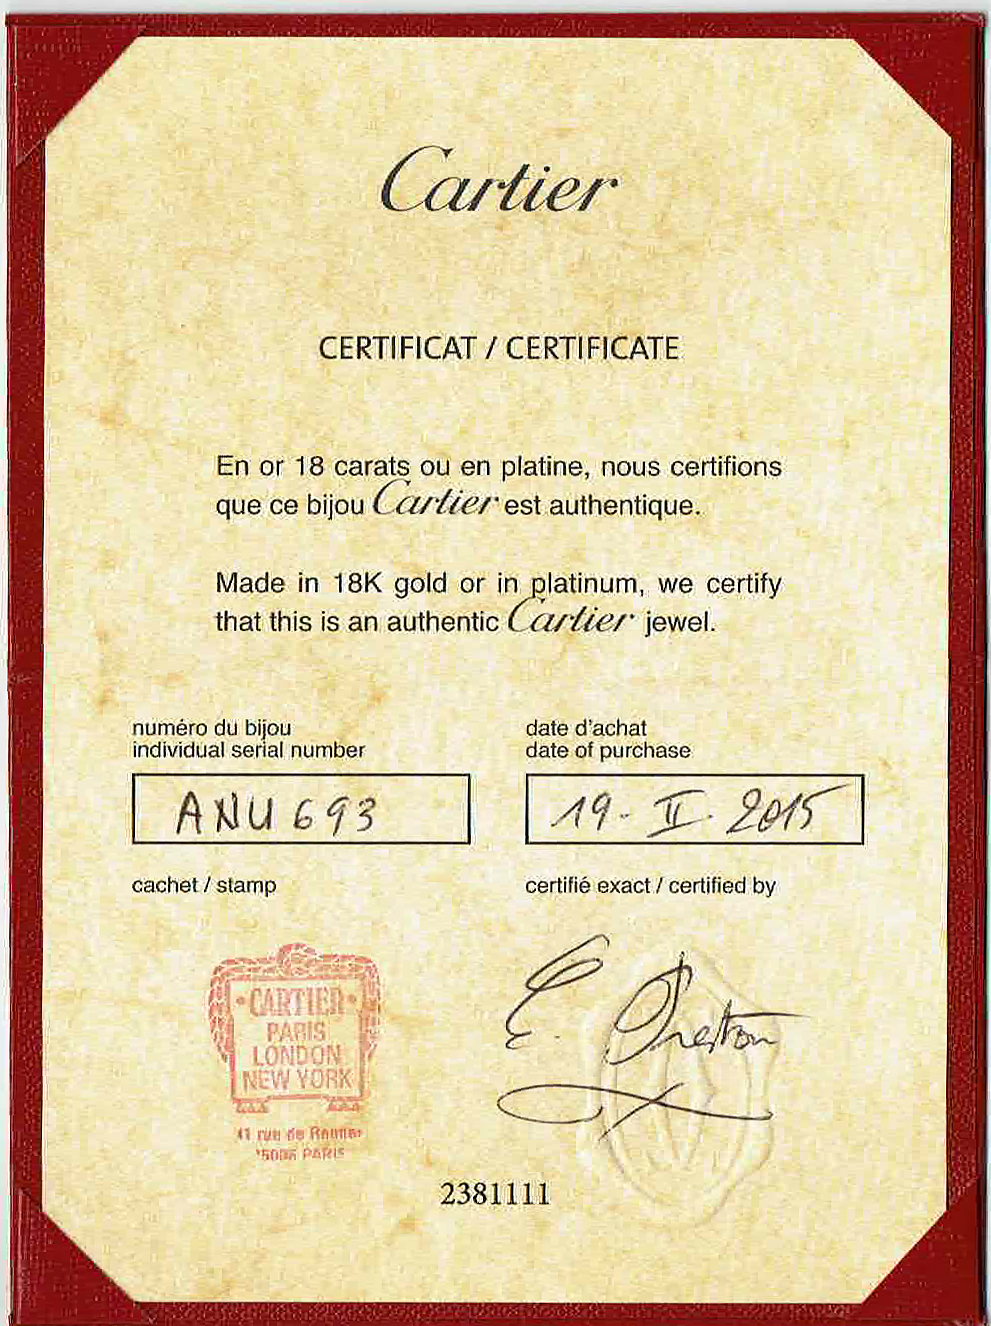 S2766-Cartier-CERT